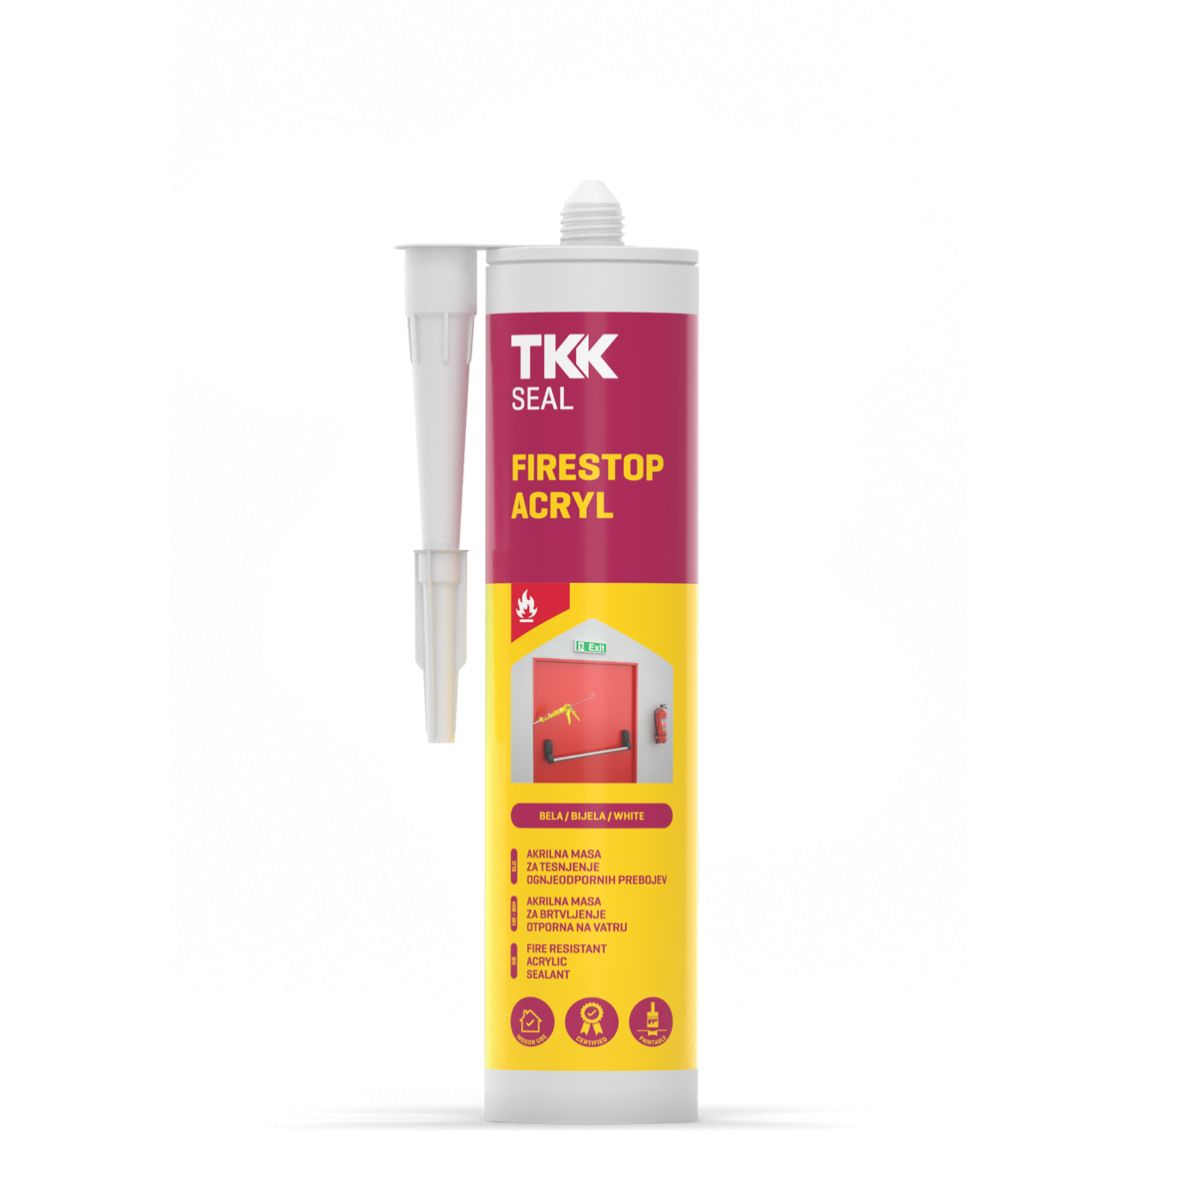 TKK Seal Firestop Acryl